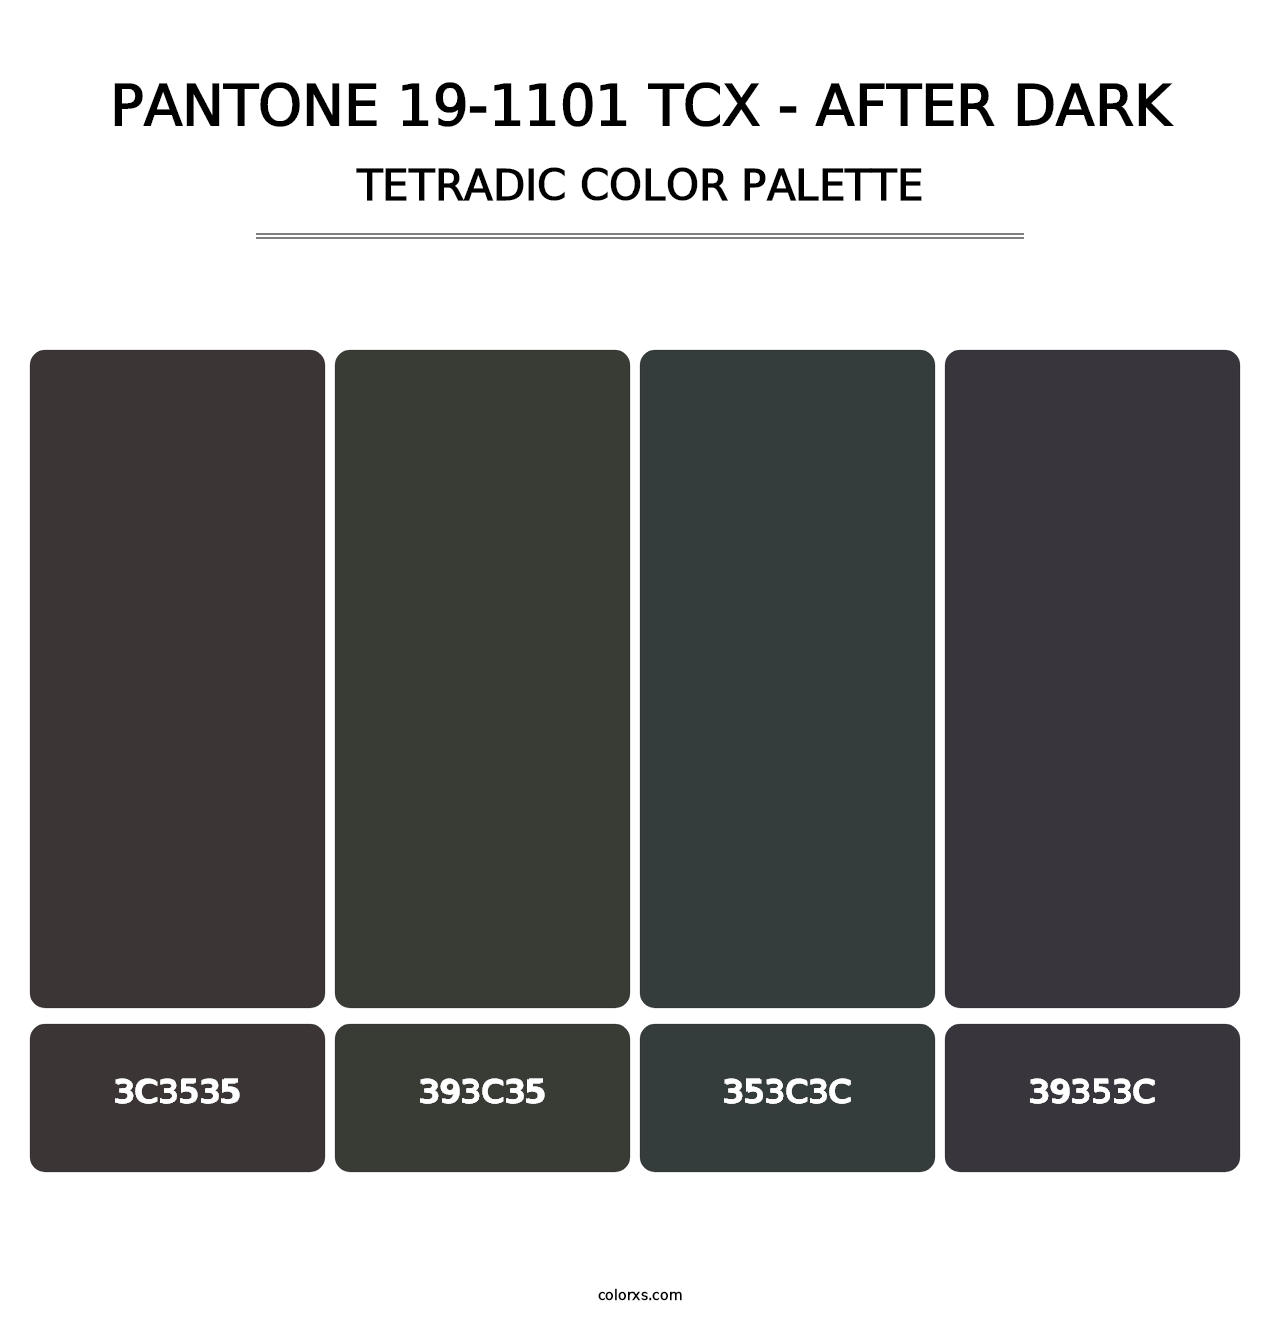 PANTONE 19-1101 TCX - After Dark - Tetradic Color Palette